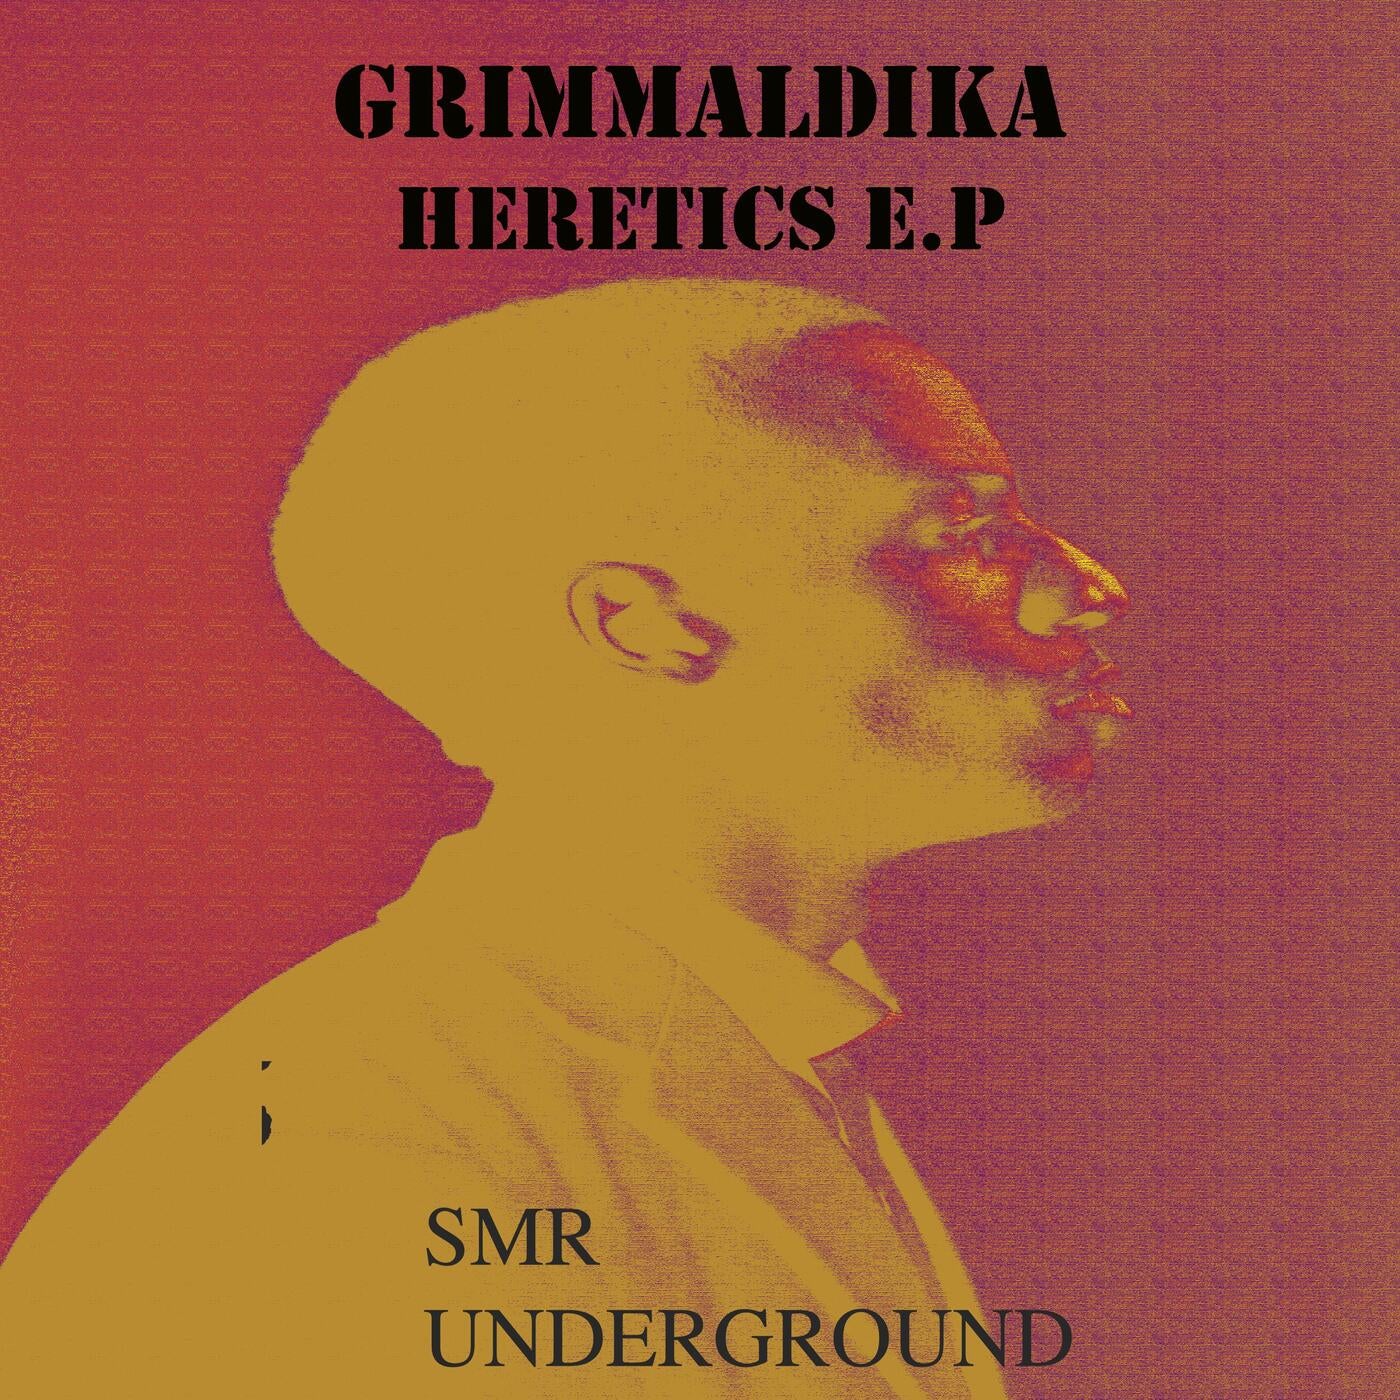 Grimmaldika – Heretics E.P [SMRTUI01]